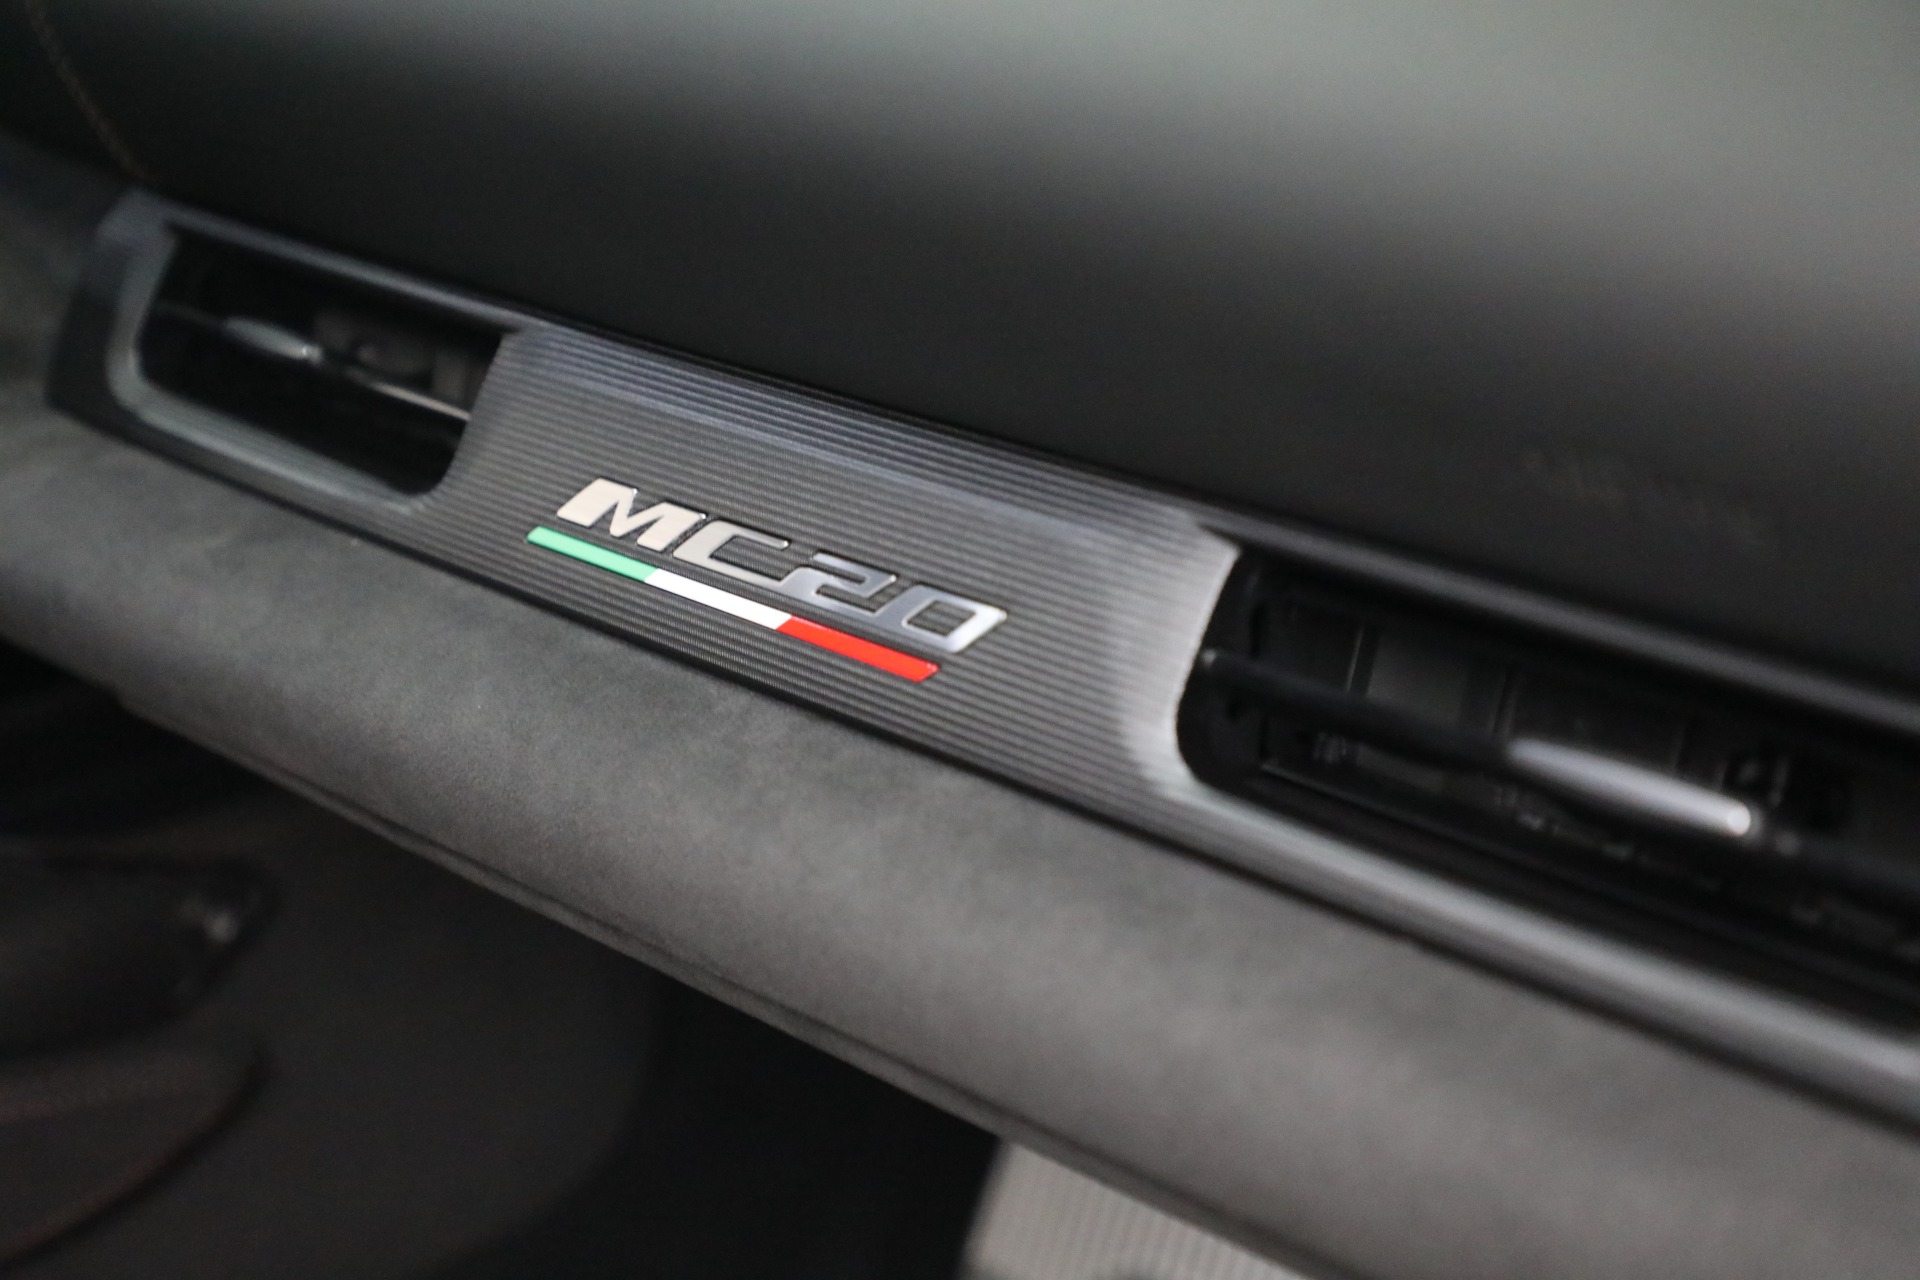 New 2022 Maserati MC20